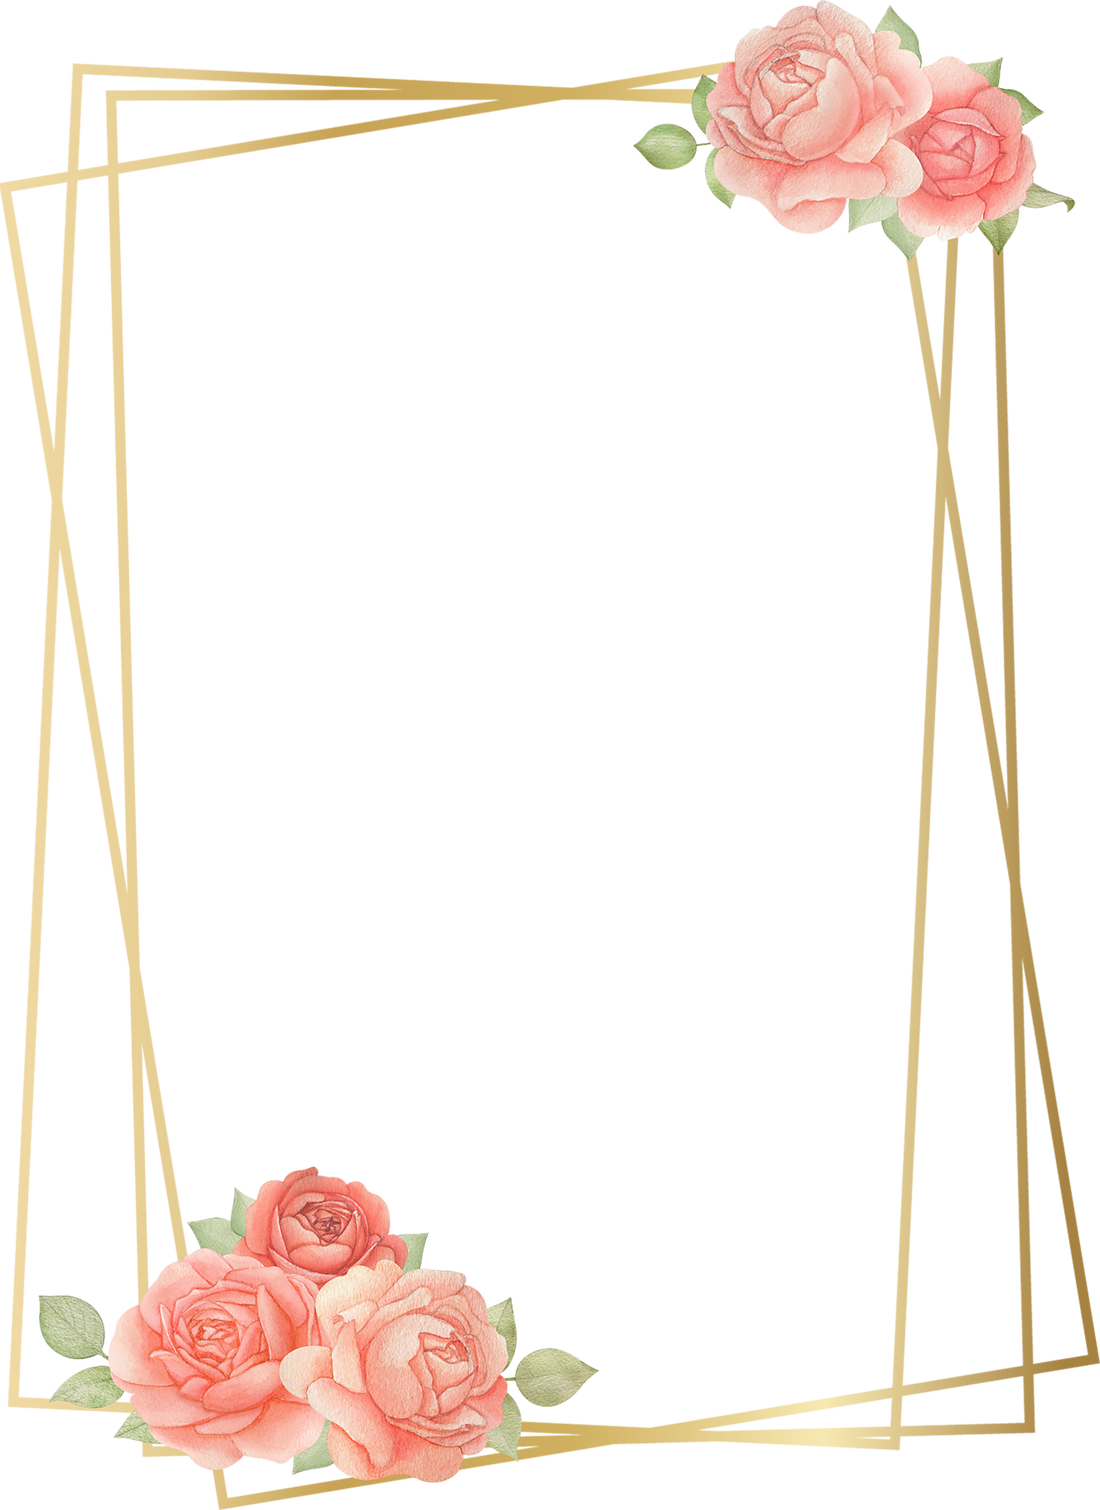 Golden Rectangular Frame with Roses